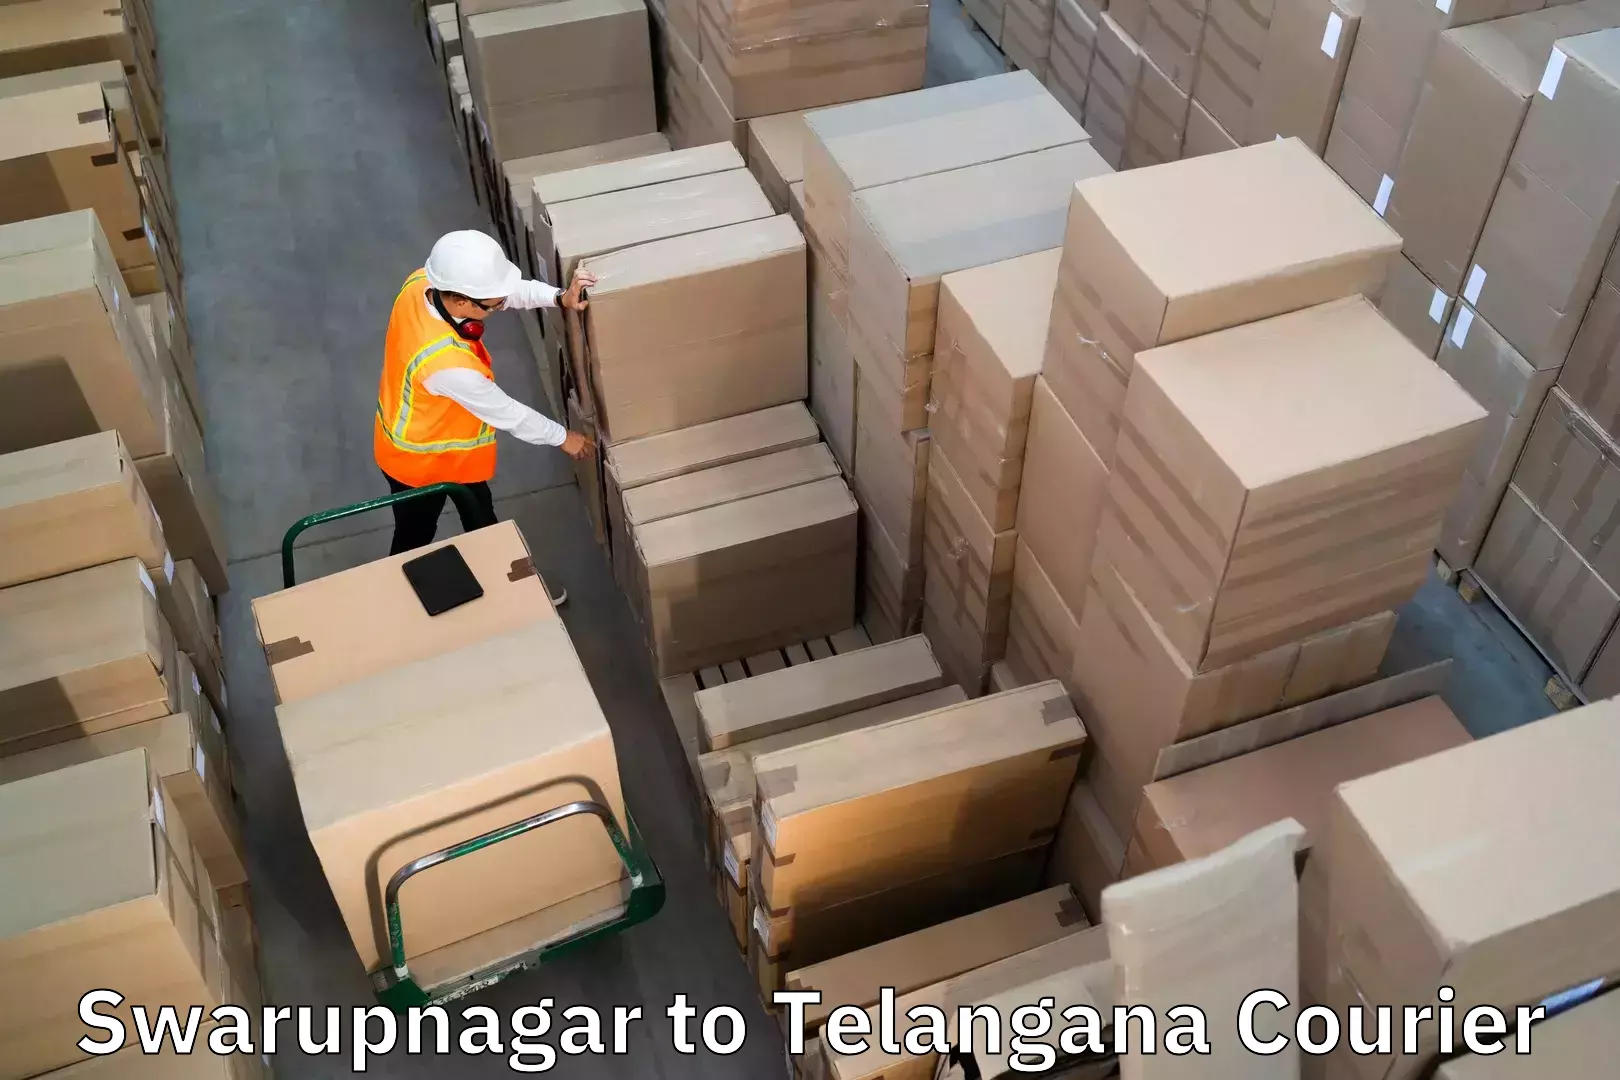 Luggage delivery optimization in Swarupnagar to Bellampalli